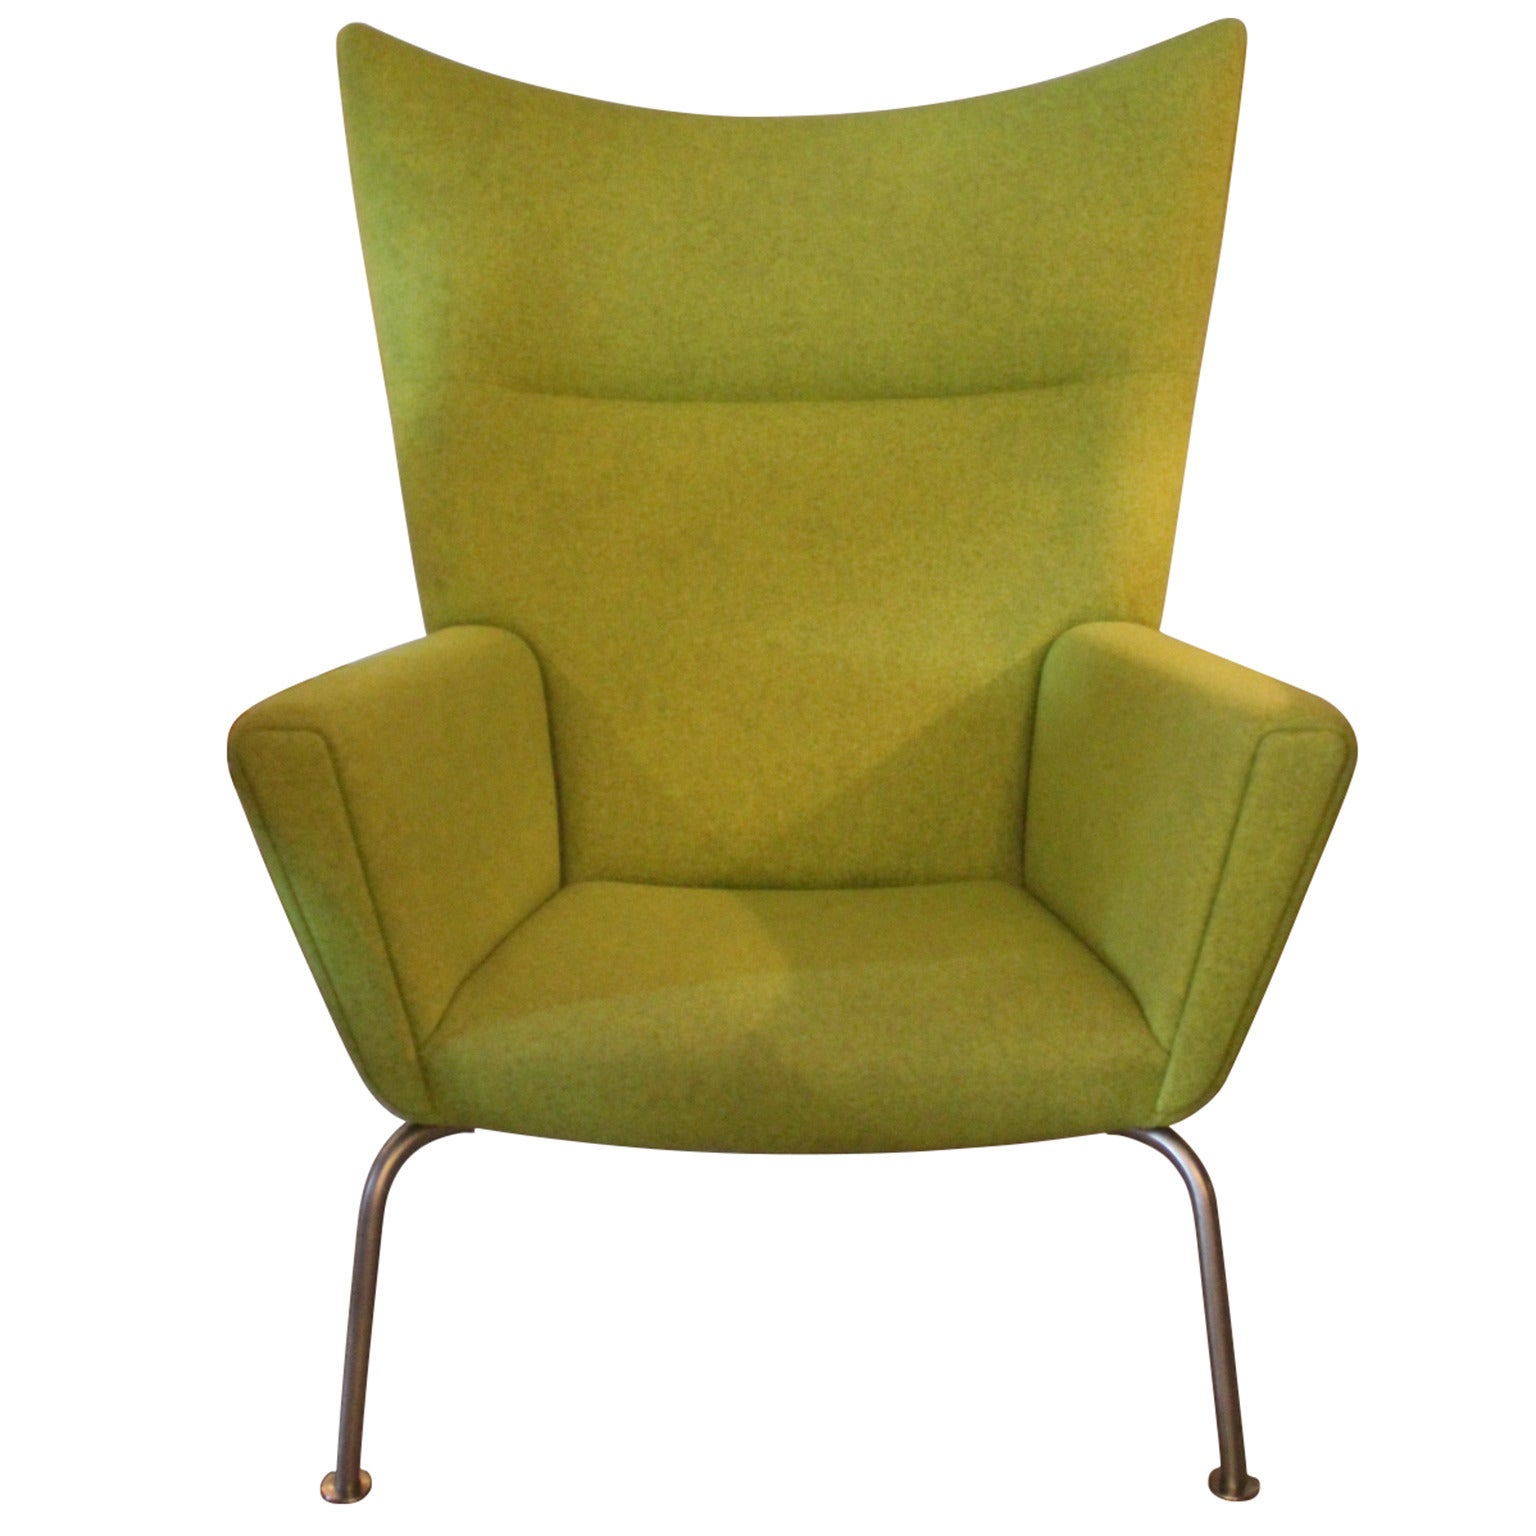 Hans J. Wegner Chair "Wingchair" Model CH445, Design 1960